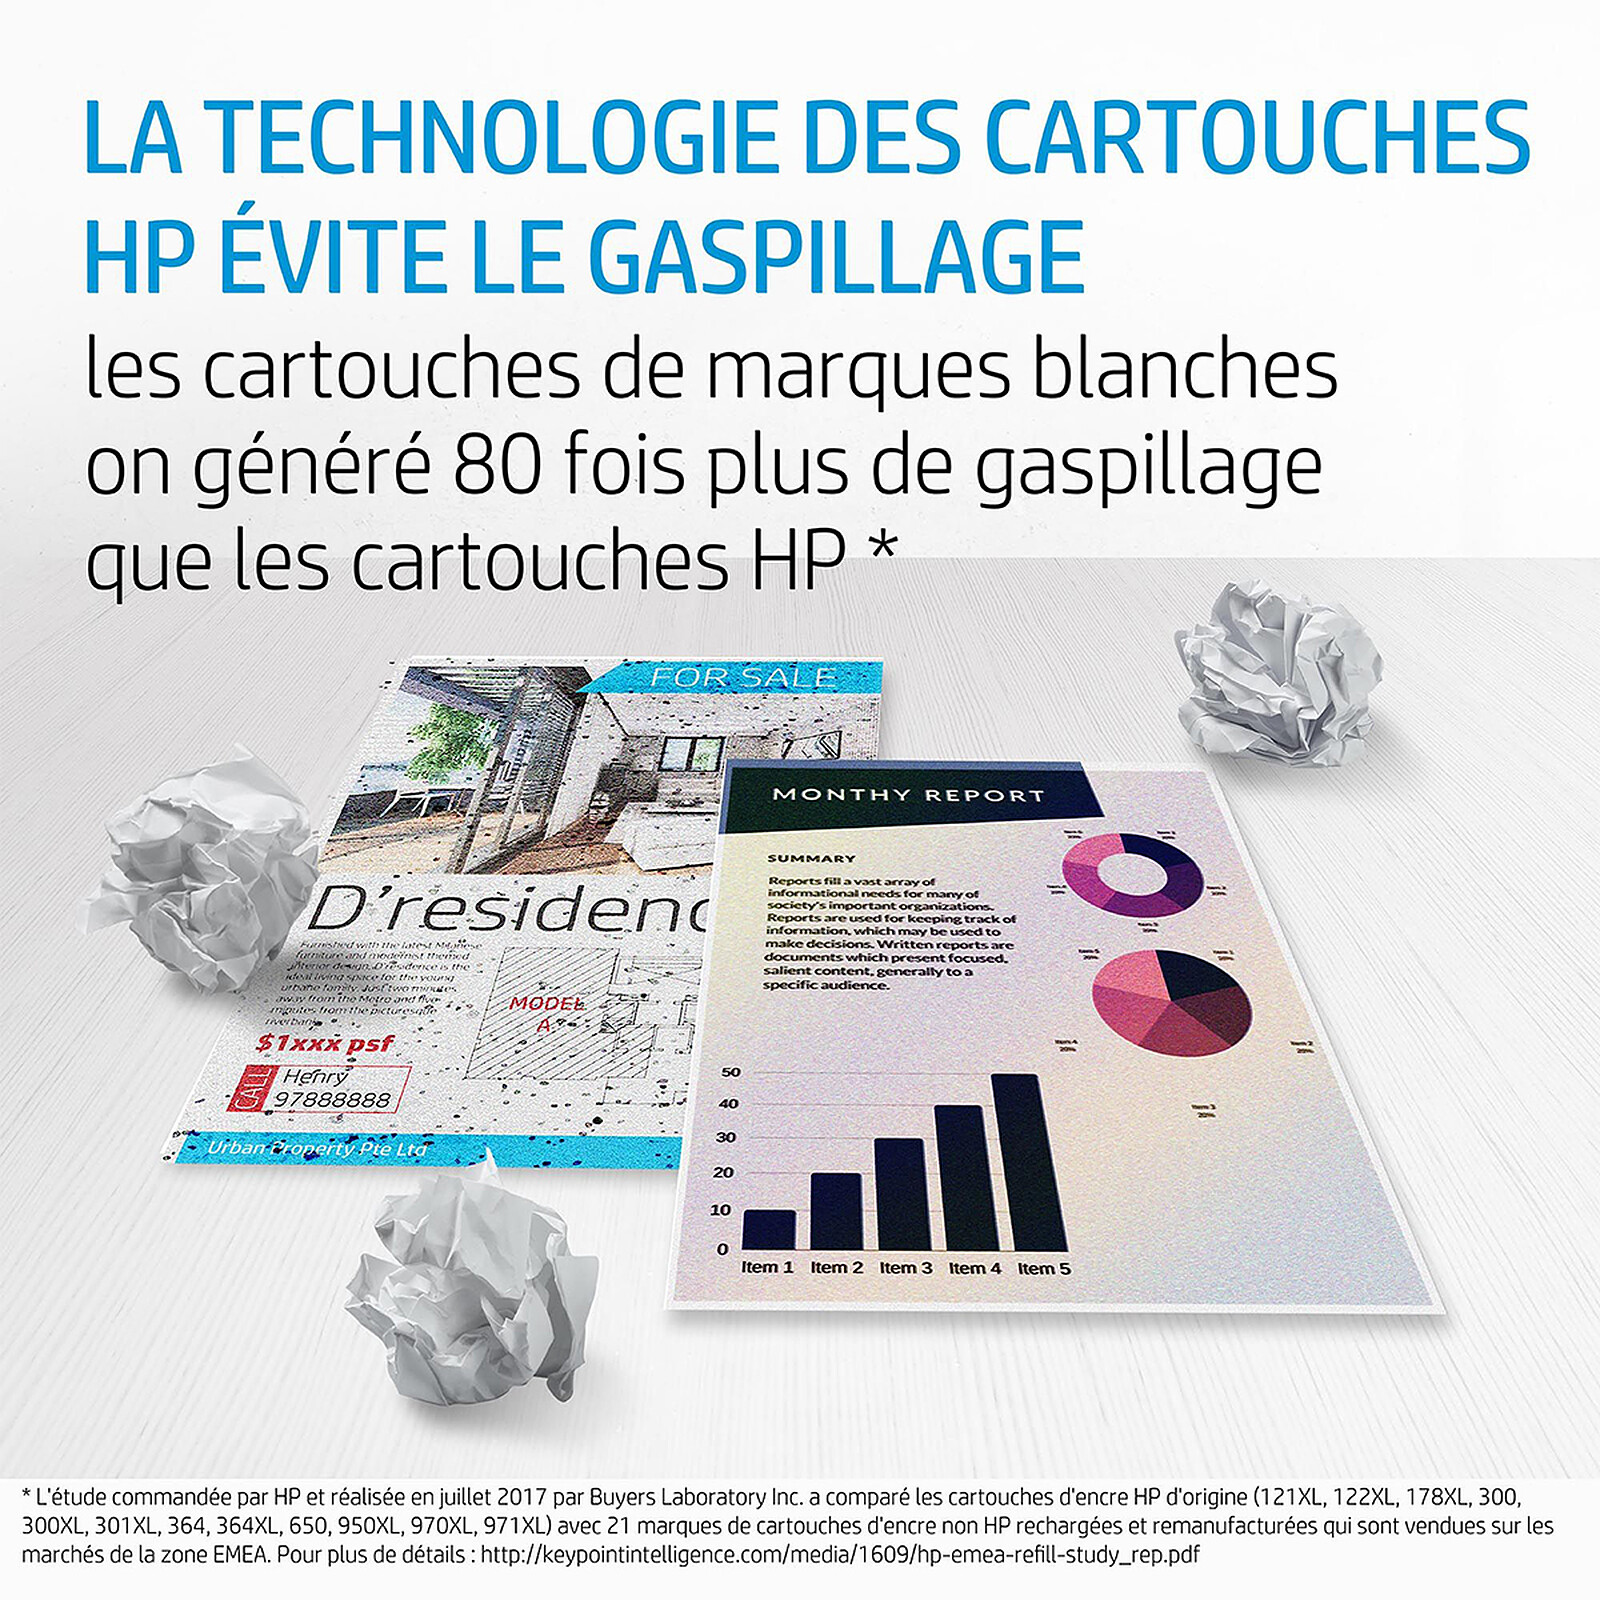 HP 963XL (3JA30AE) - Noir - Cartouche imprimante - LDLC